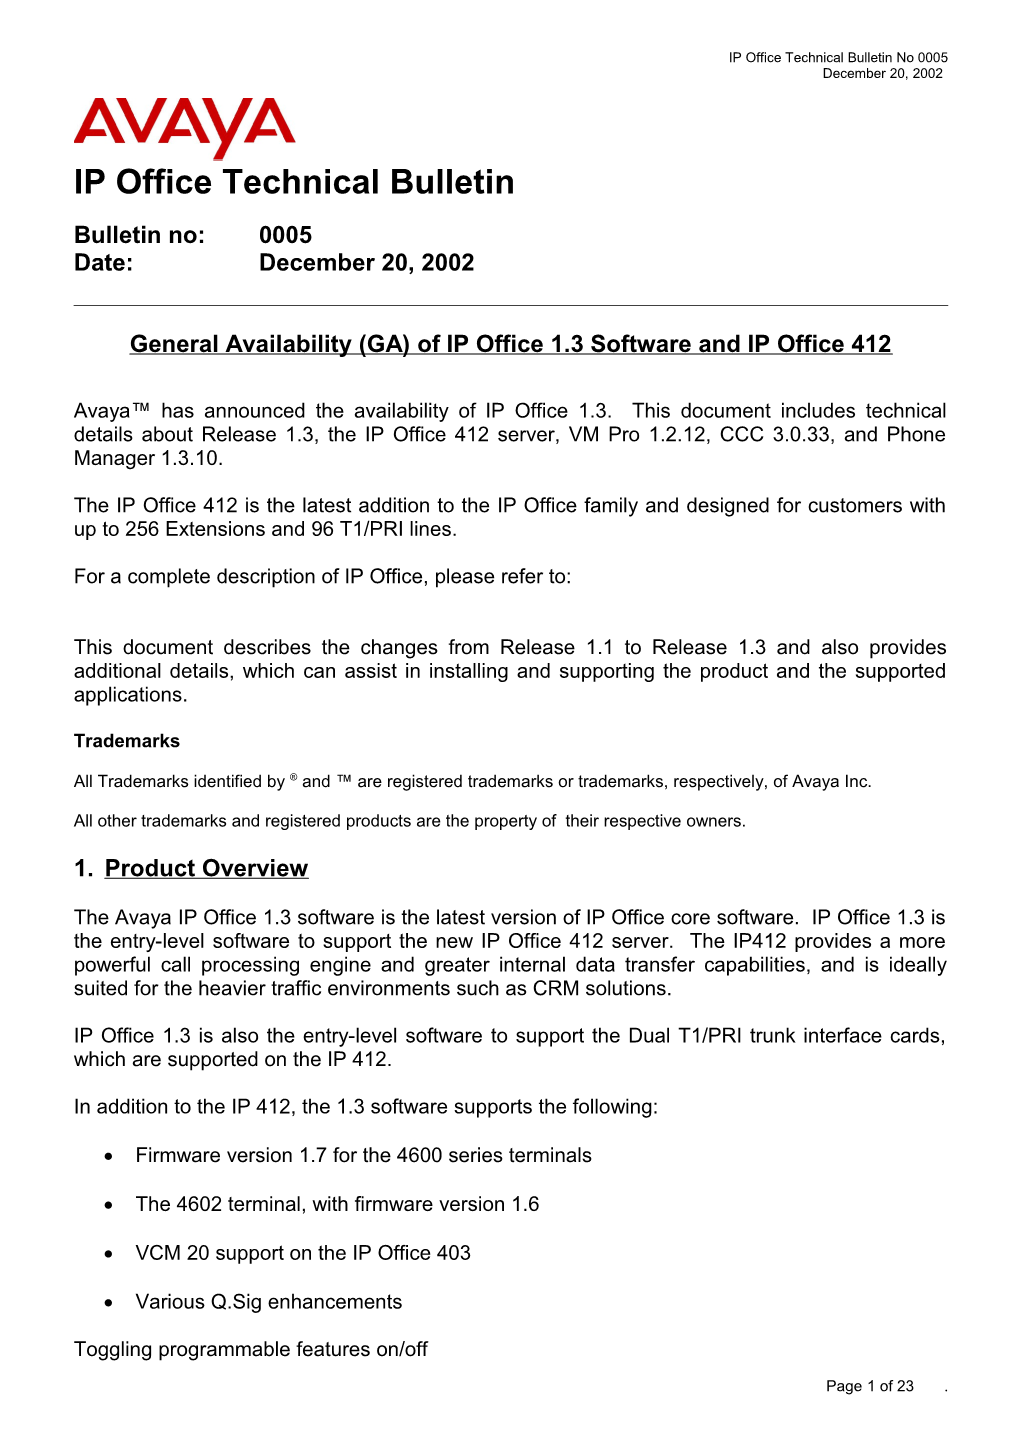 Avaya IP Office 1.3 Technical Bulletin